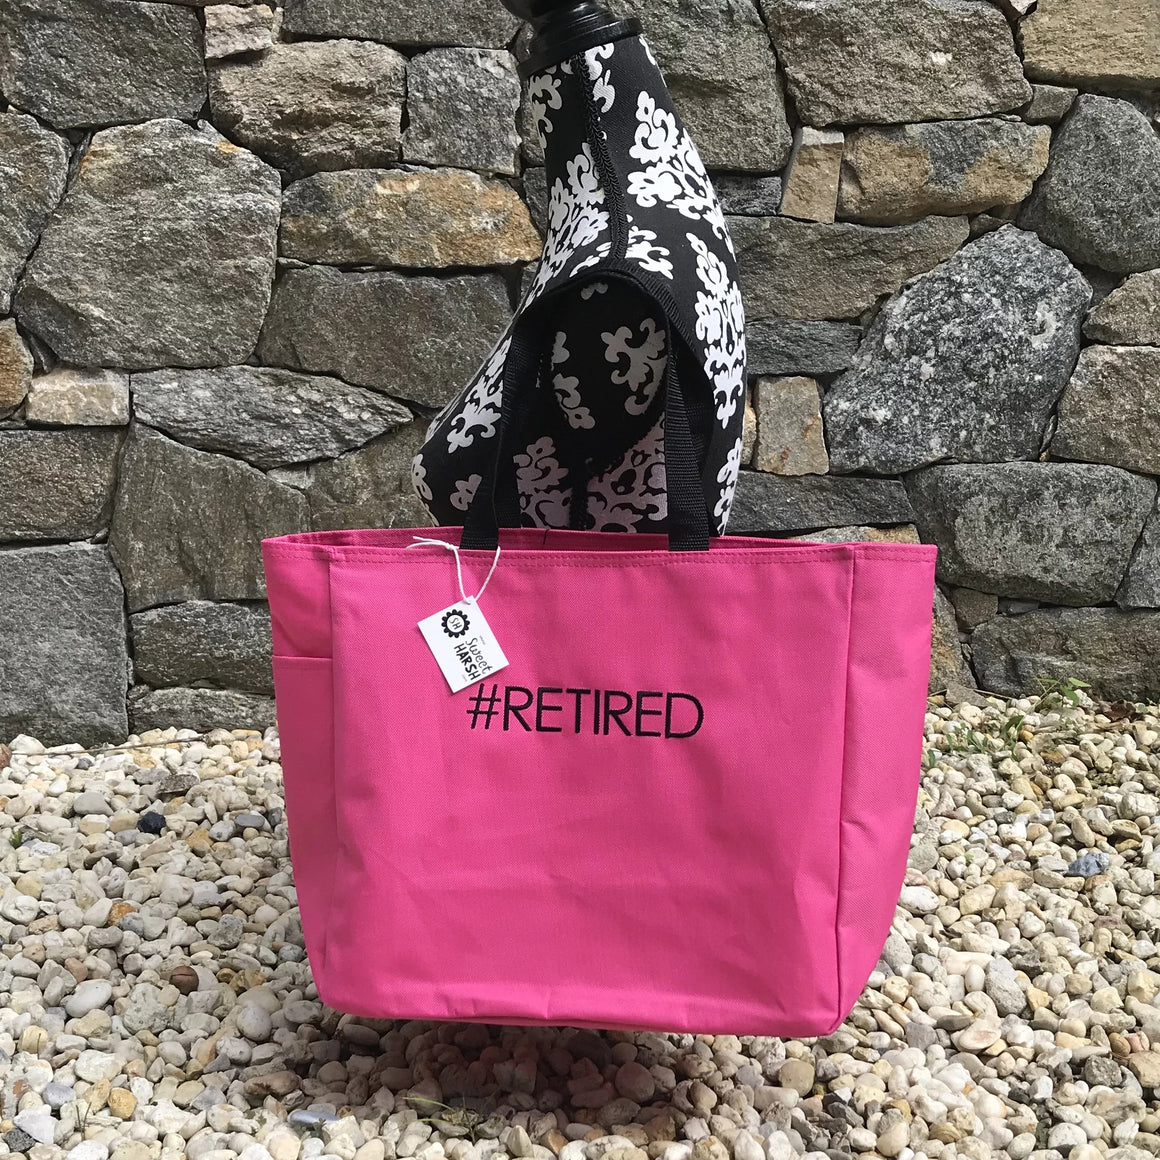 #RETIRED Retirement Tote Bag